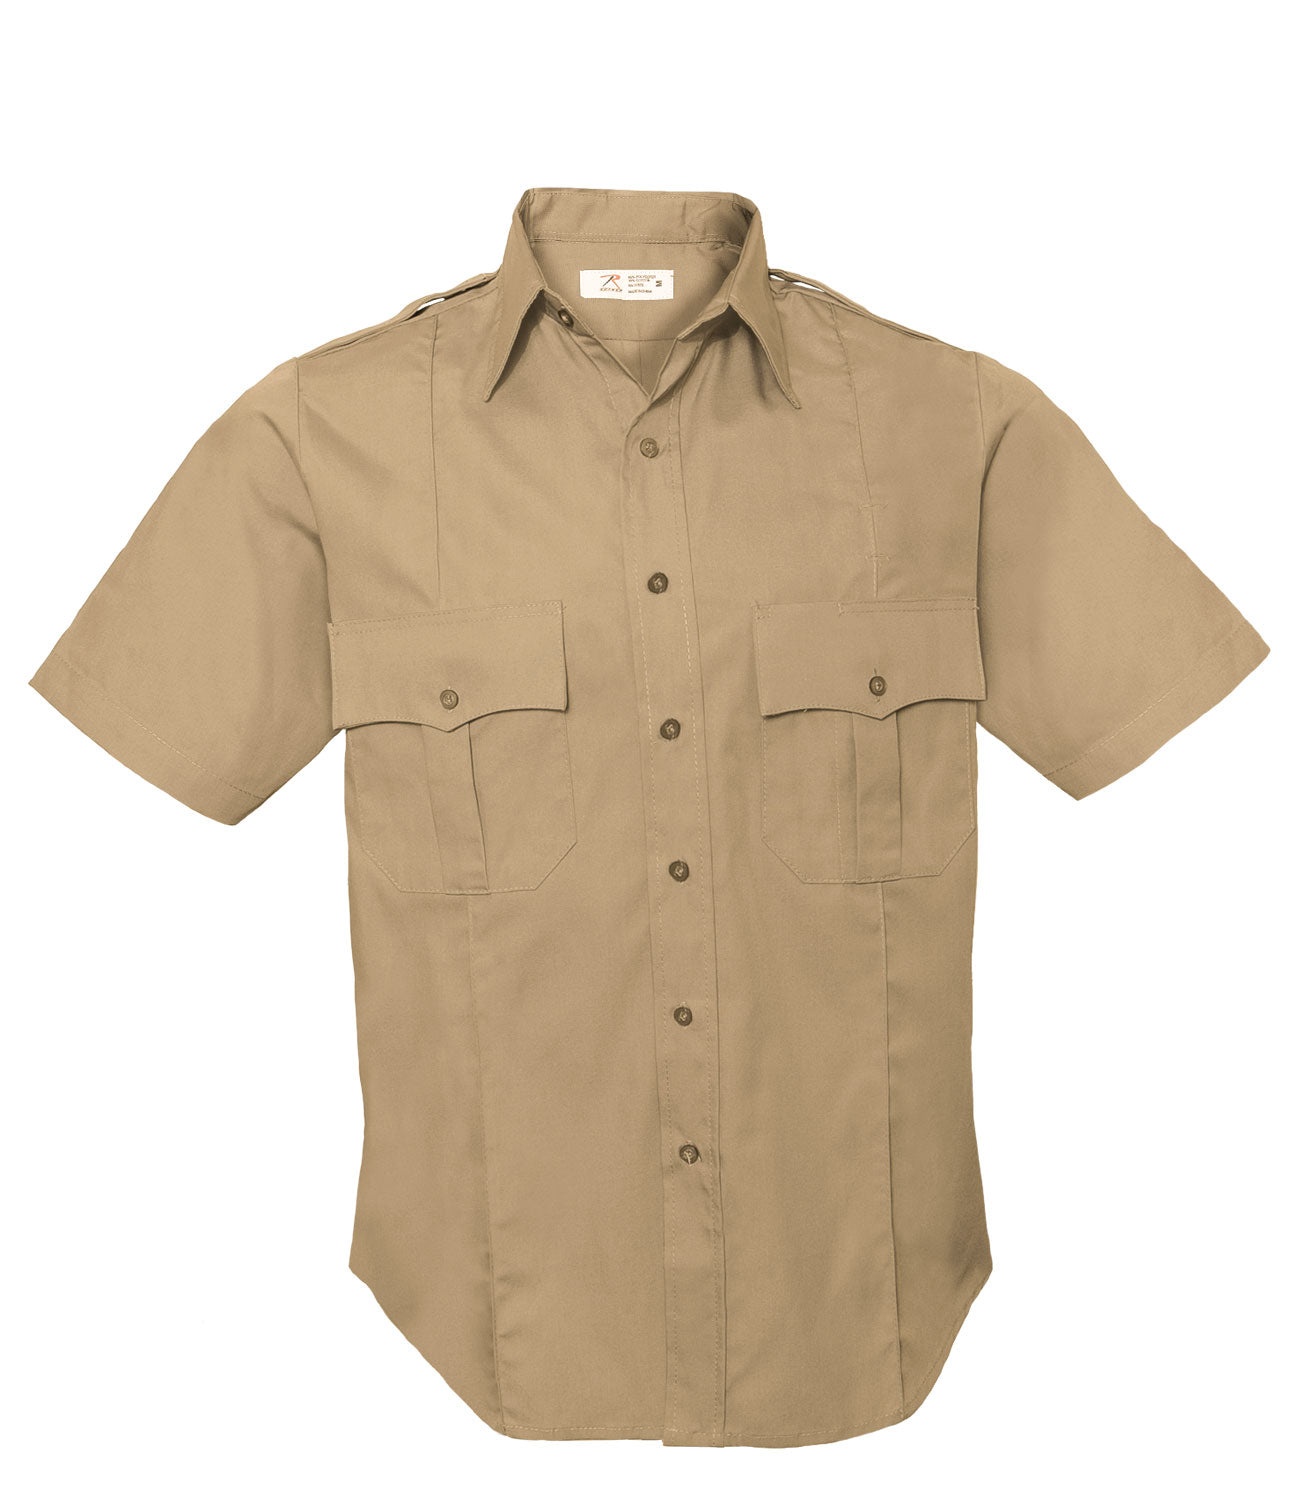 [Public Safety] Poly/Combed Cotton Poplin Weave Police & Security Short-Sleeve Uniform Shirts Khaki